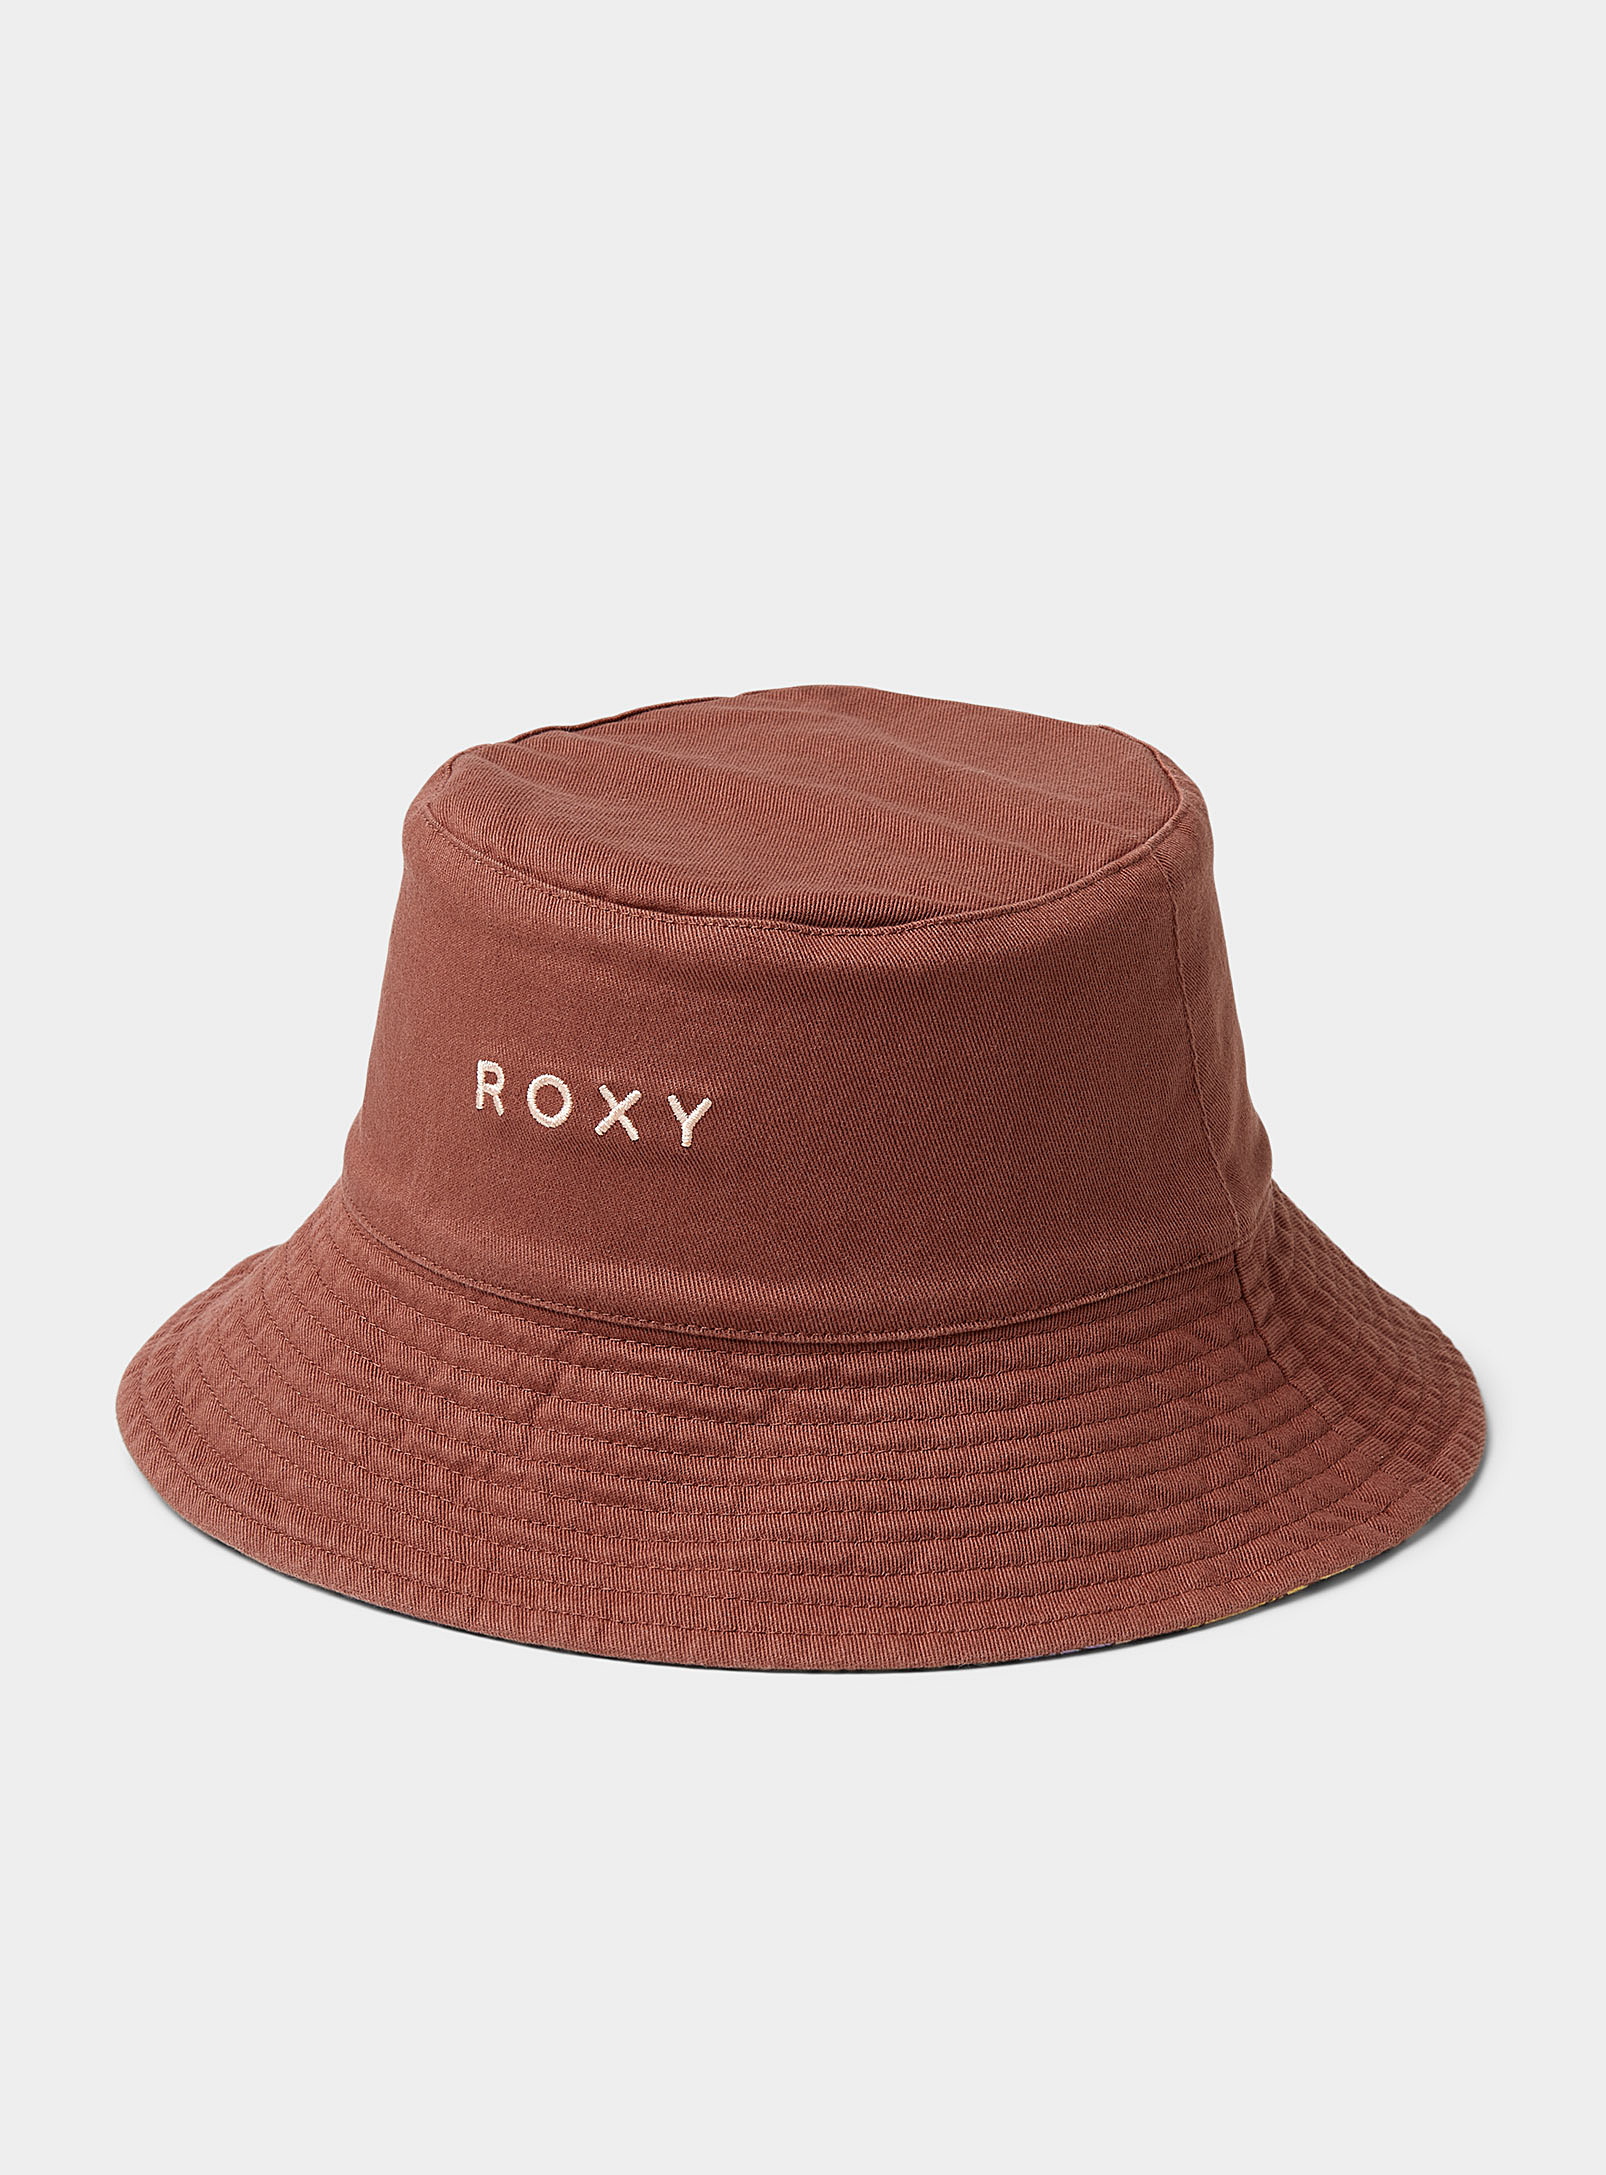 Roxy Summer Flower Reversible Bucket Hat In Brown